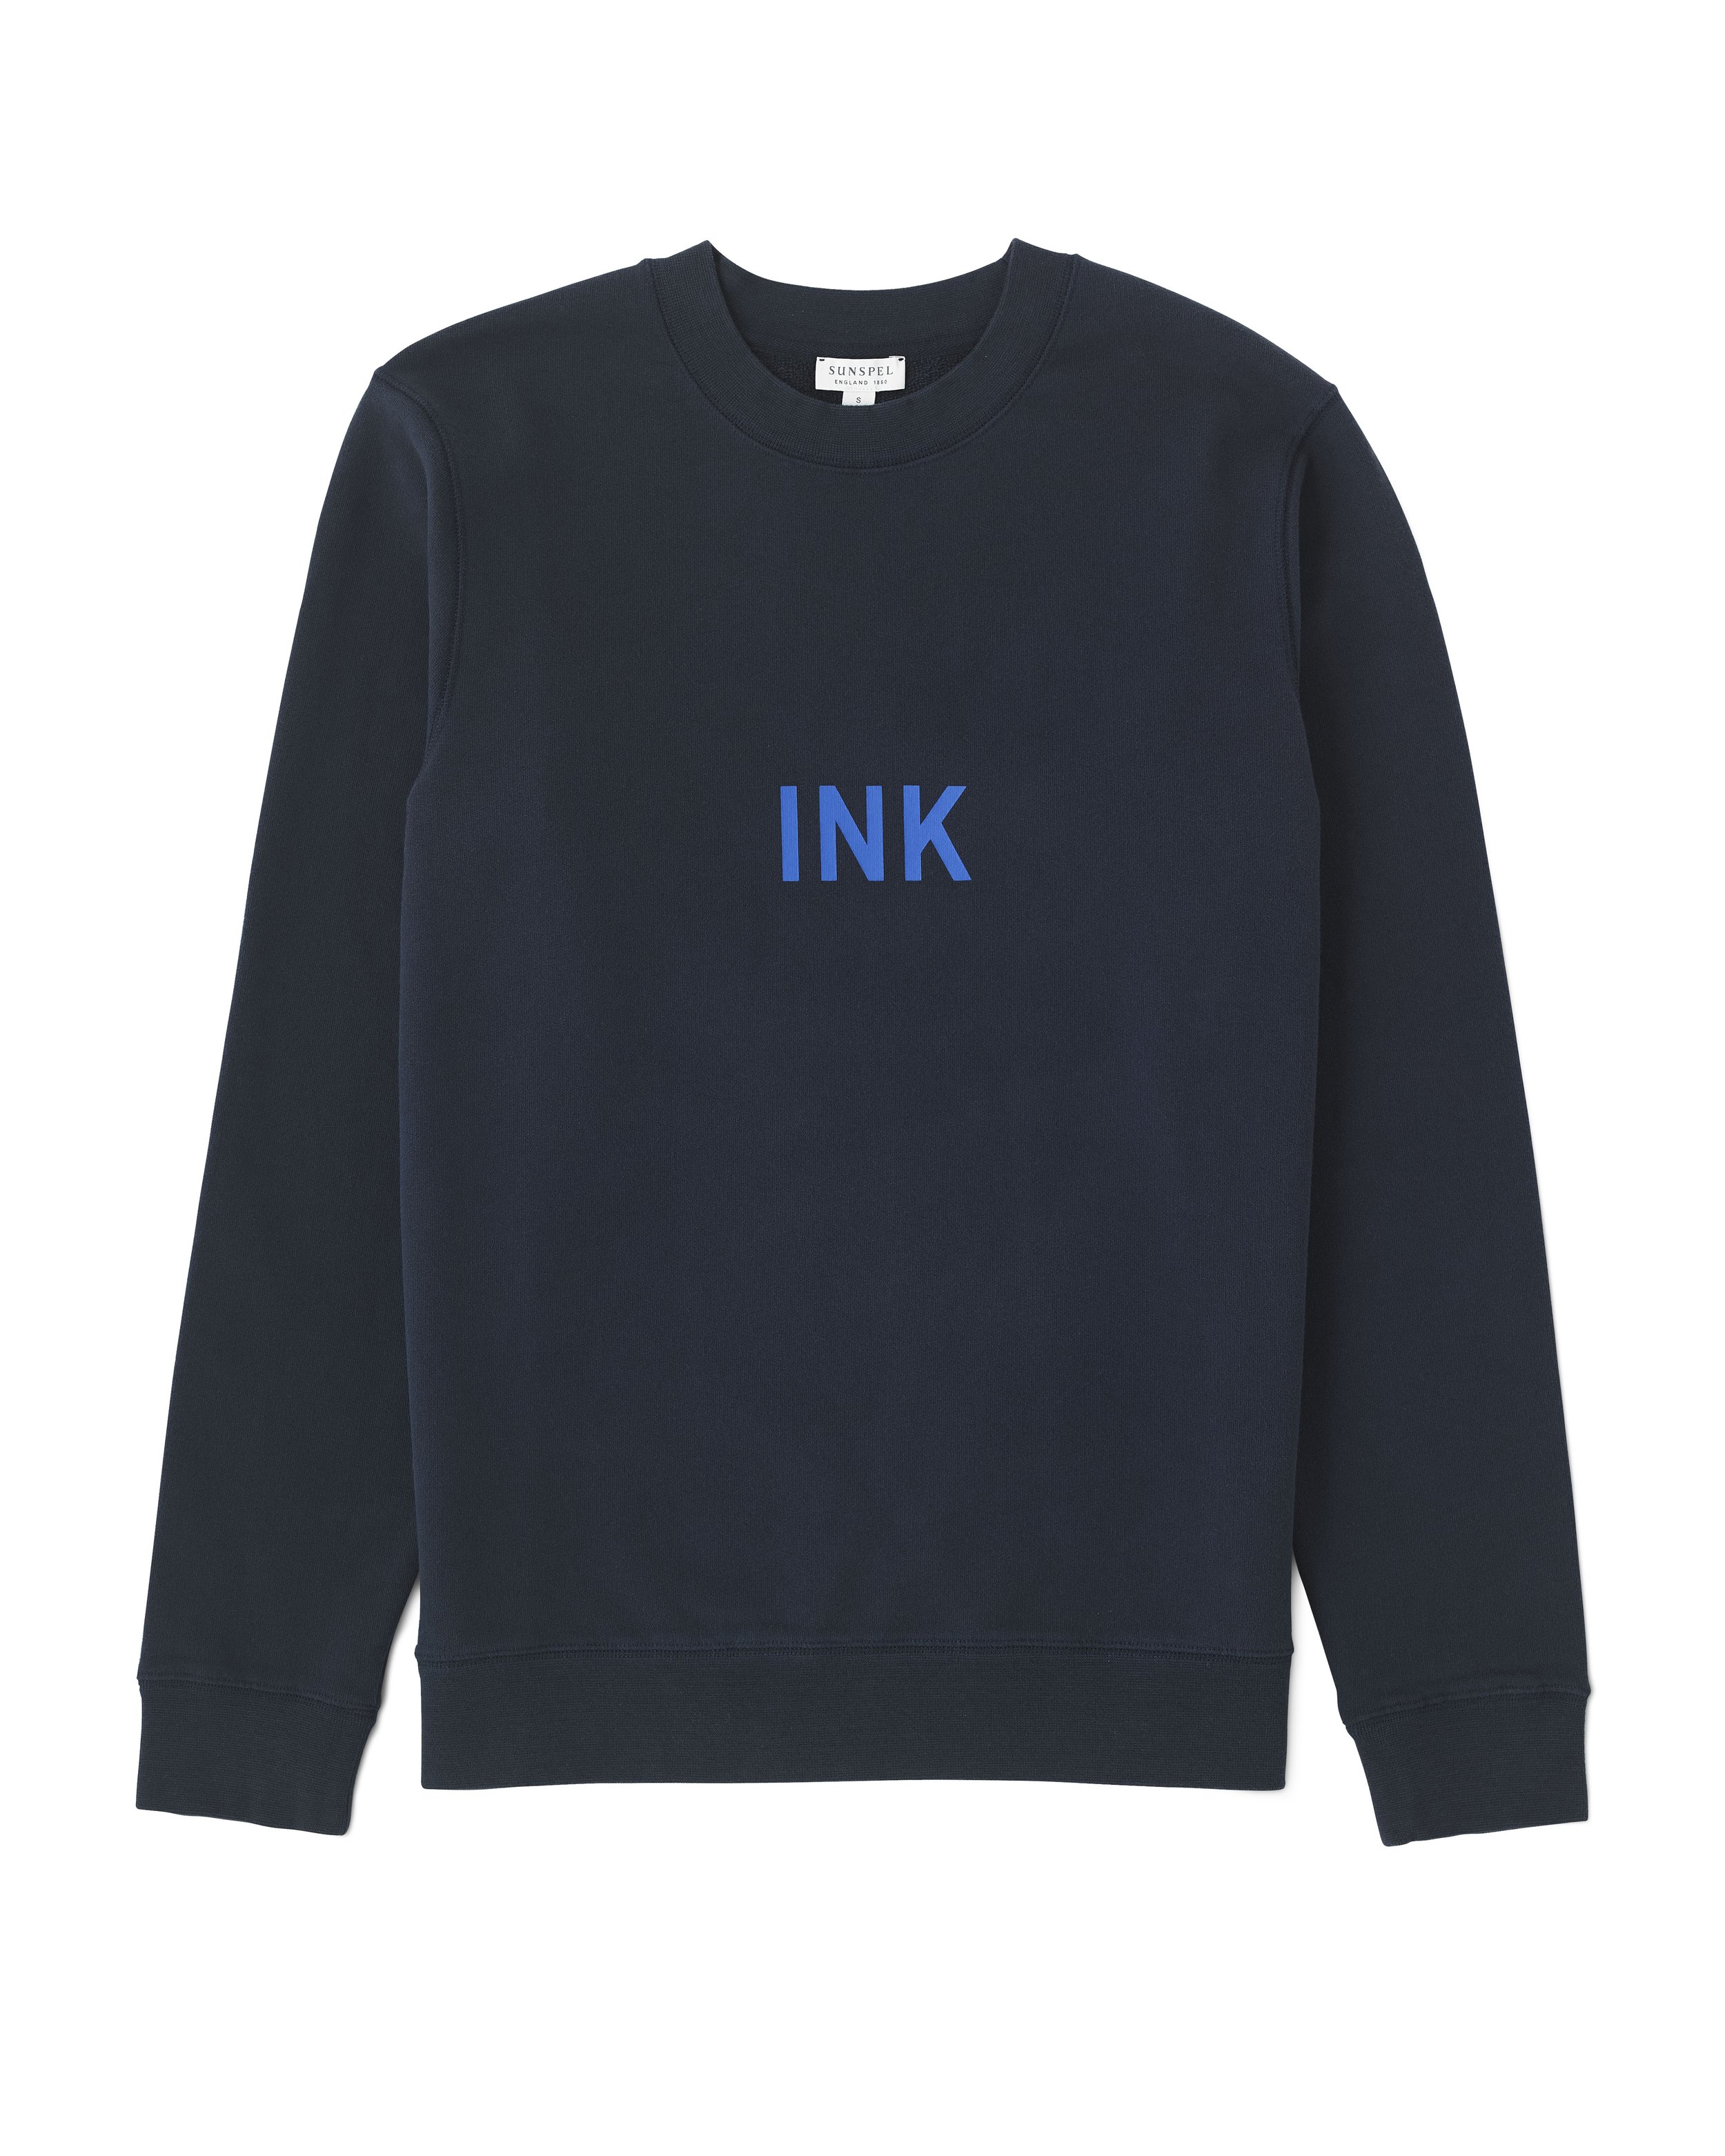 PH x Sunspel - INK Sweater Navy.jpg